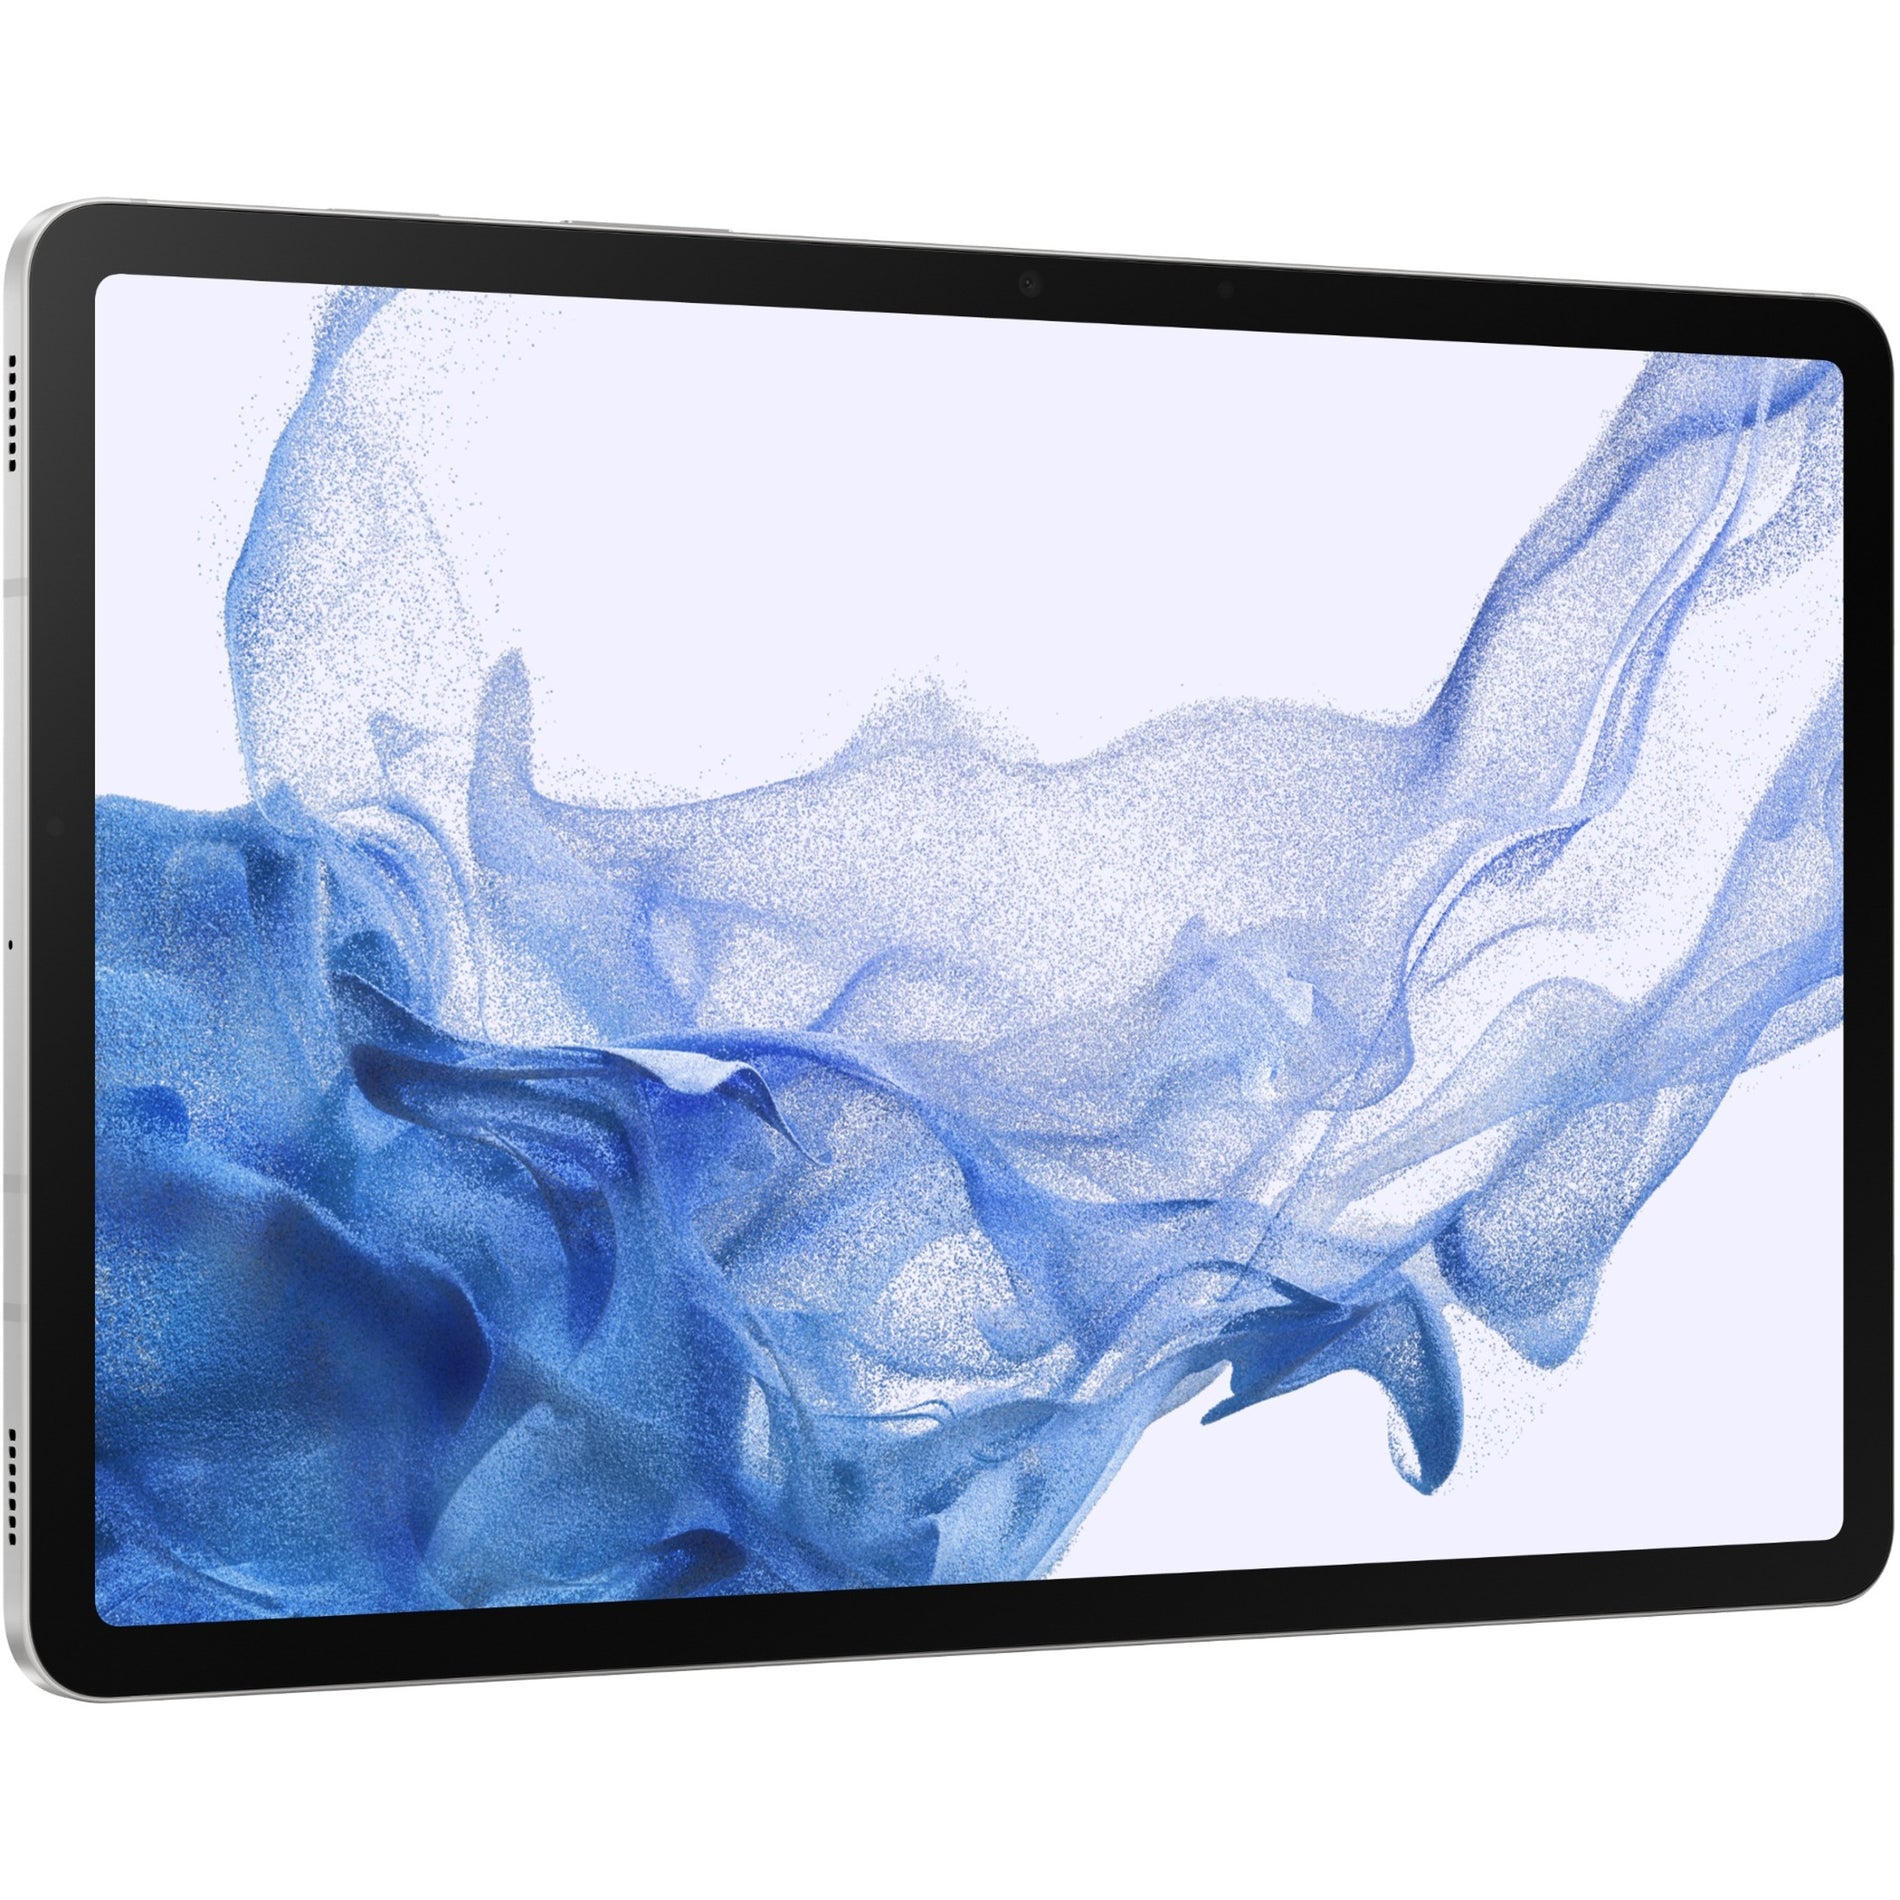 Samsung Galaxy Tab S8 Tablet - 256GB, Wi-Fi, Silver [Discontinued]